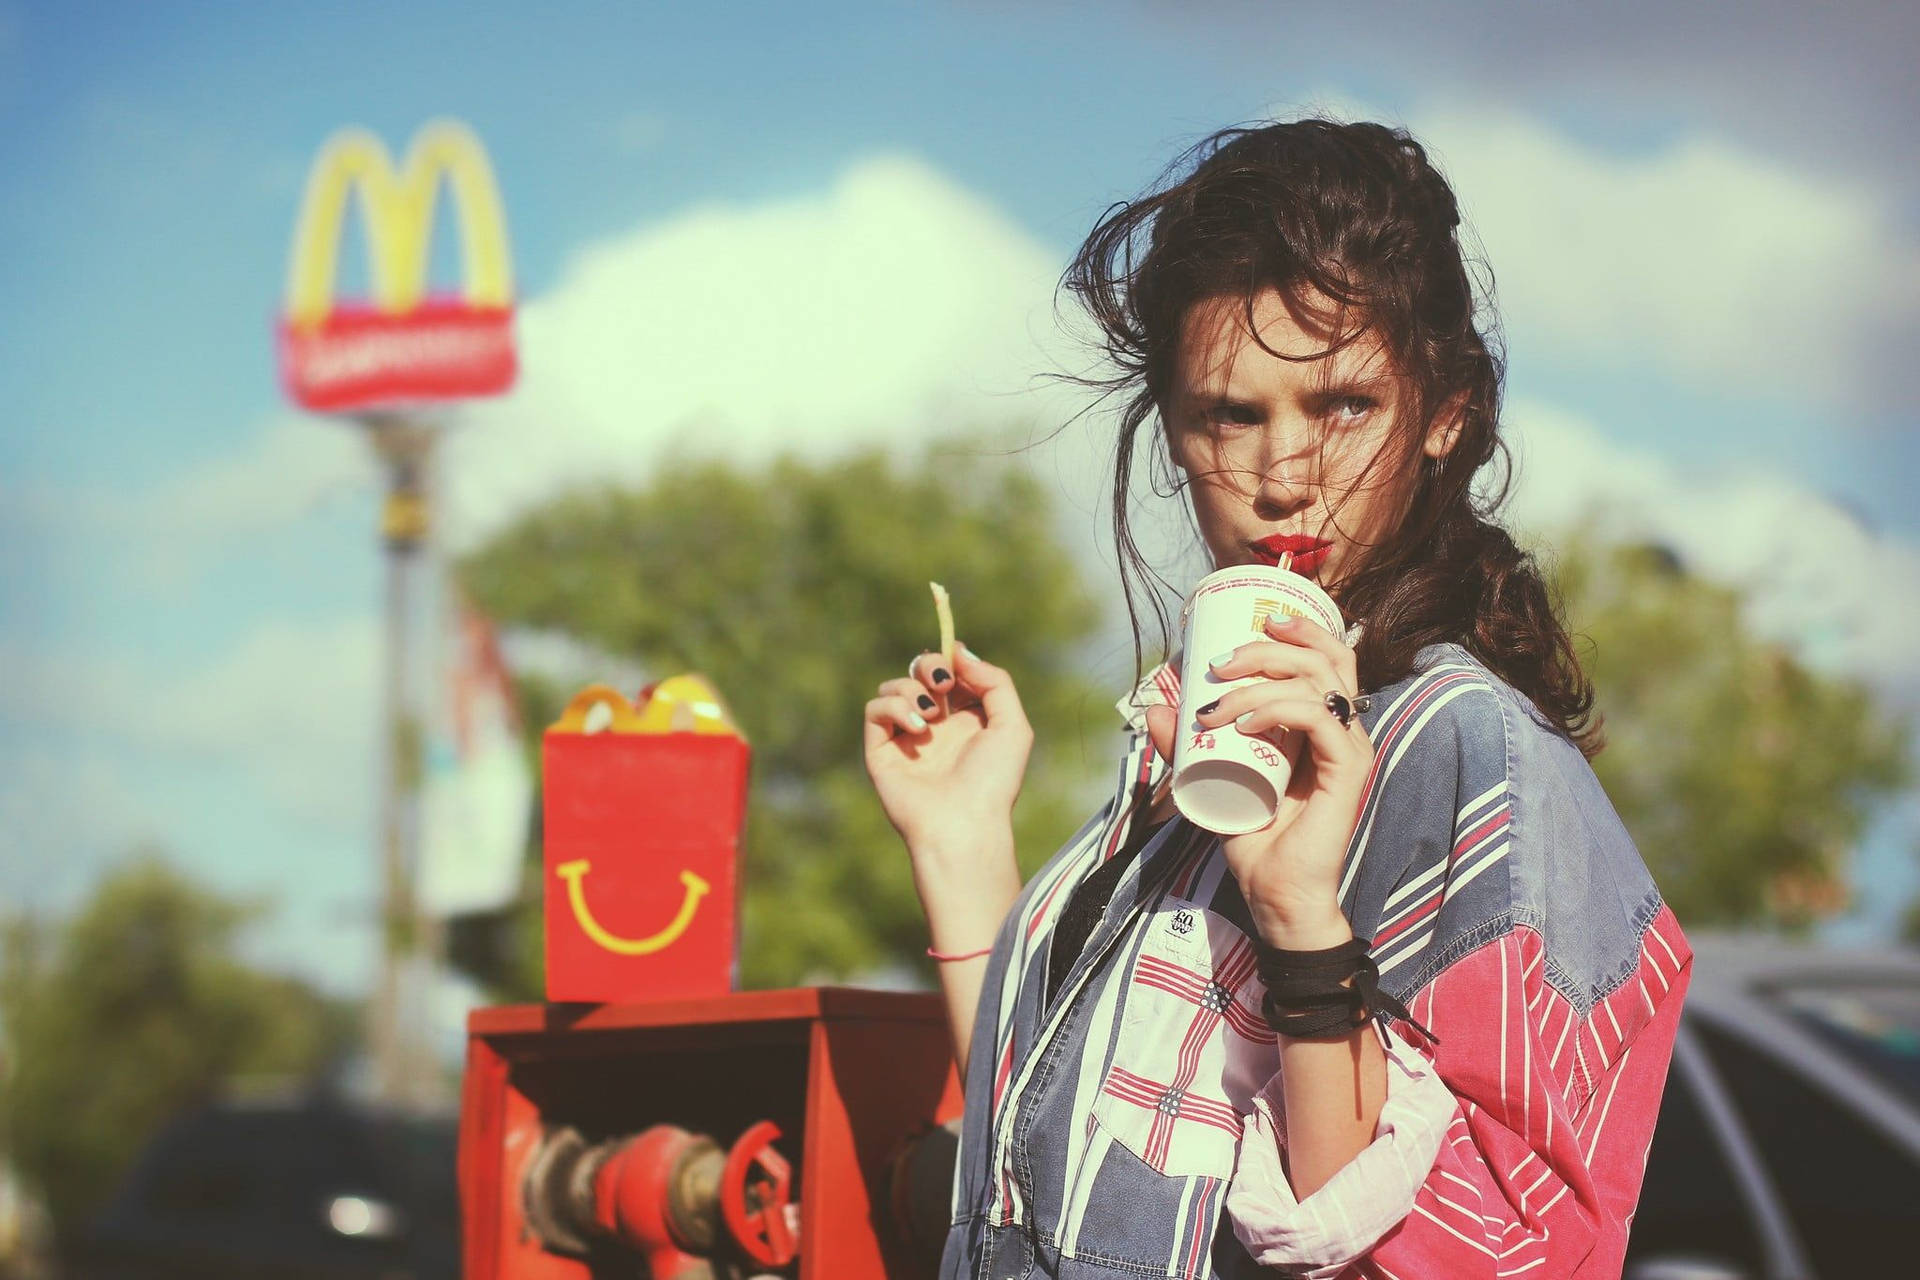 Beautiful Girl And McDonald's Wallpaper